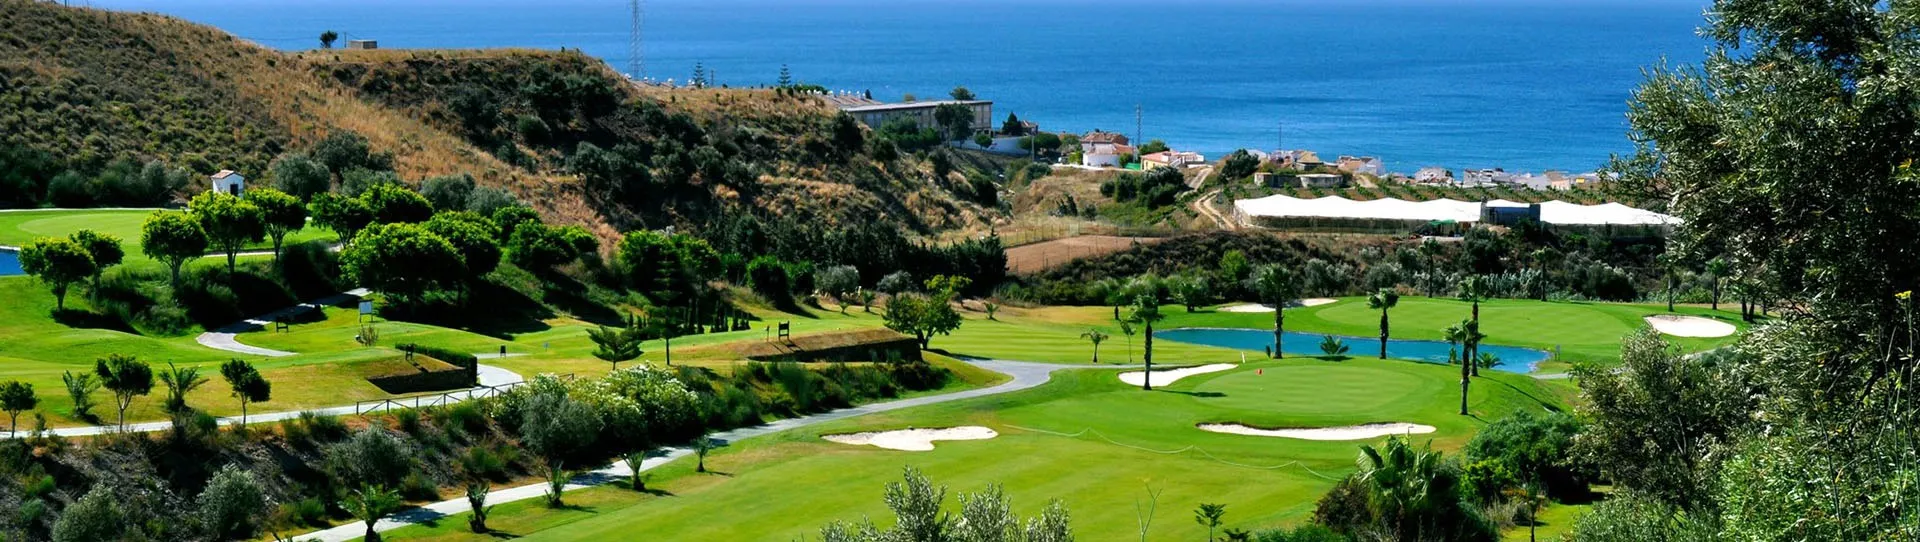 Spain golf courses - Baviera Golf Course - Photo 1